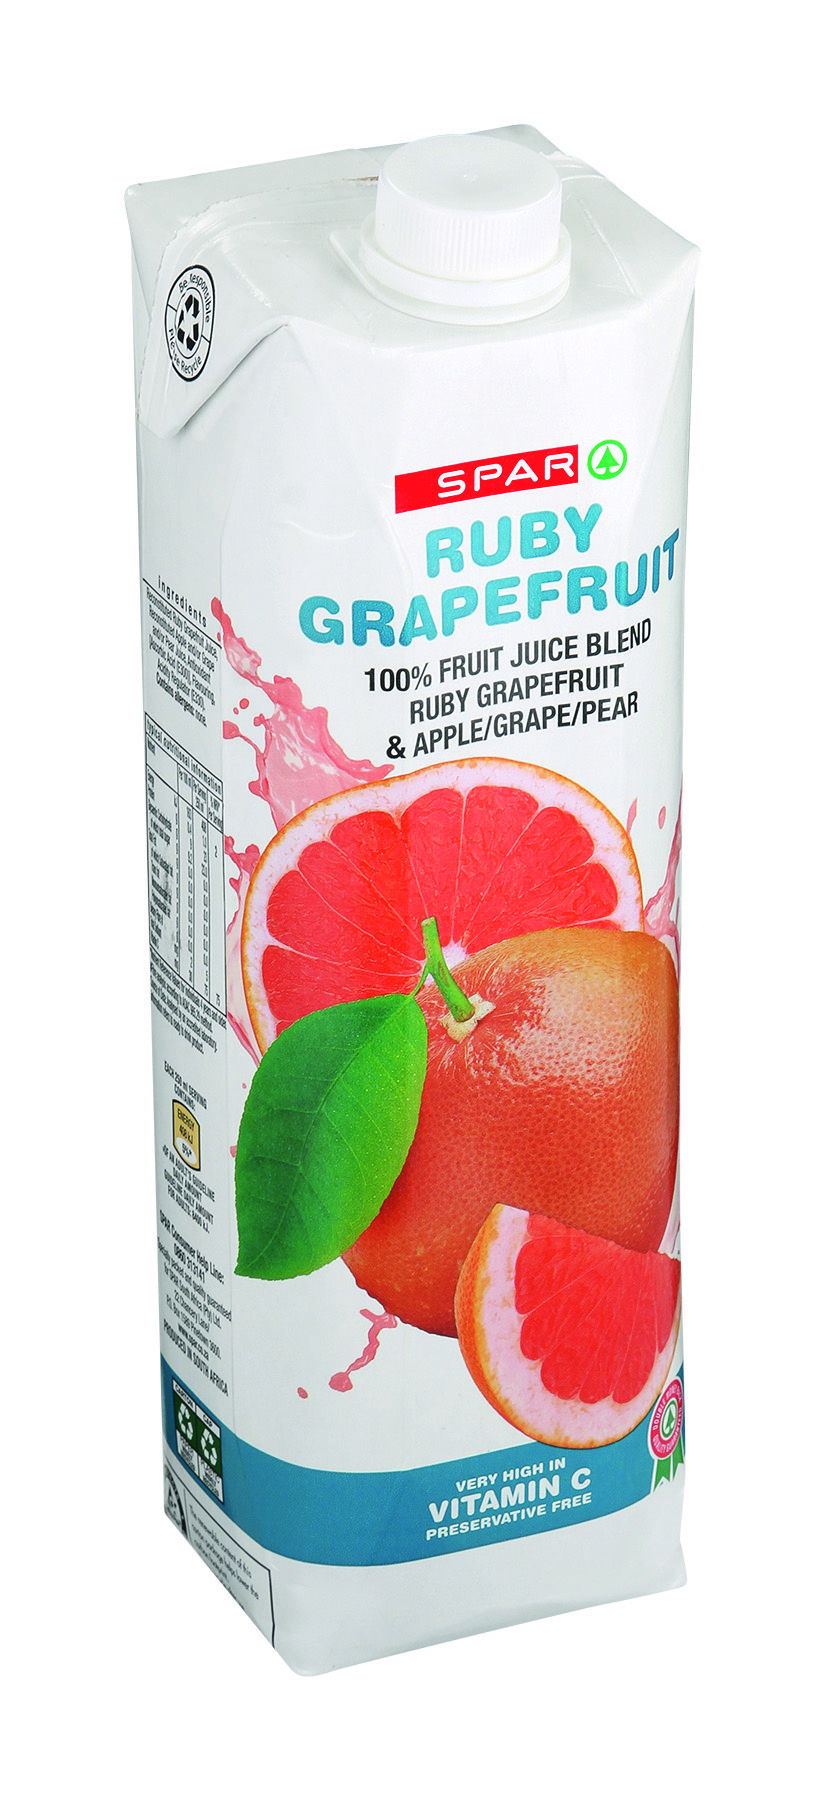 juice blend - ruby grapefruit